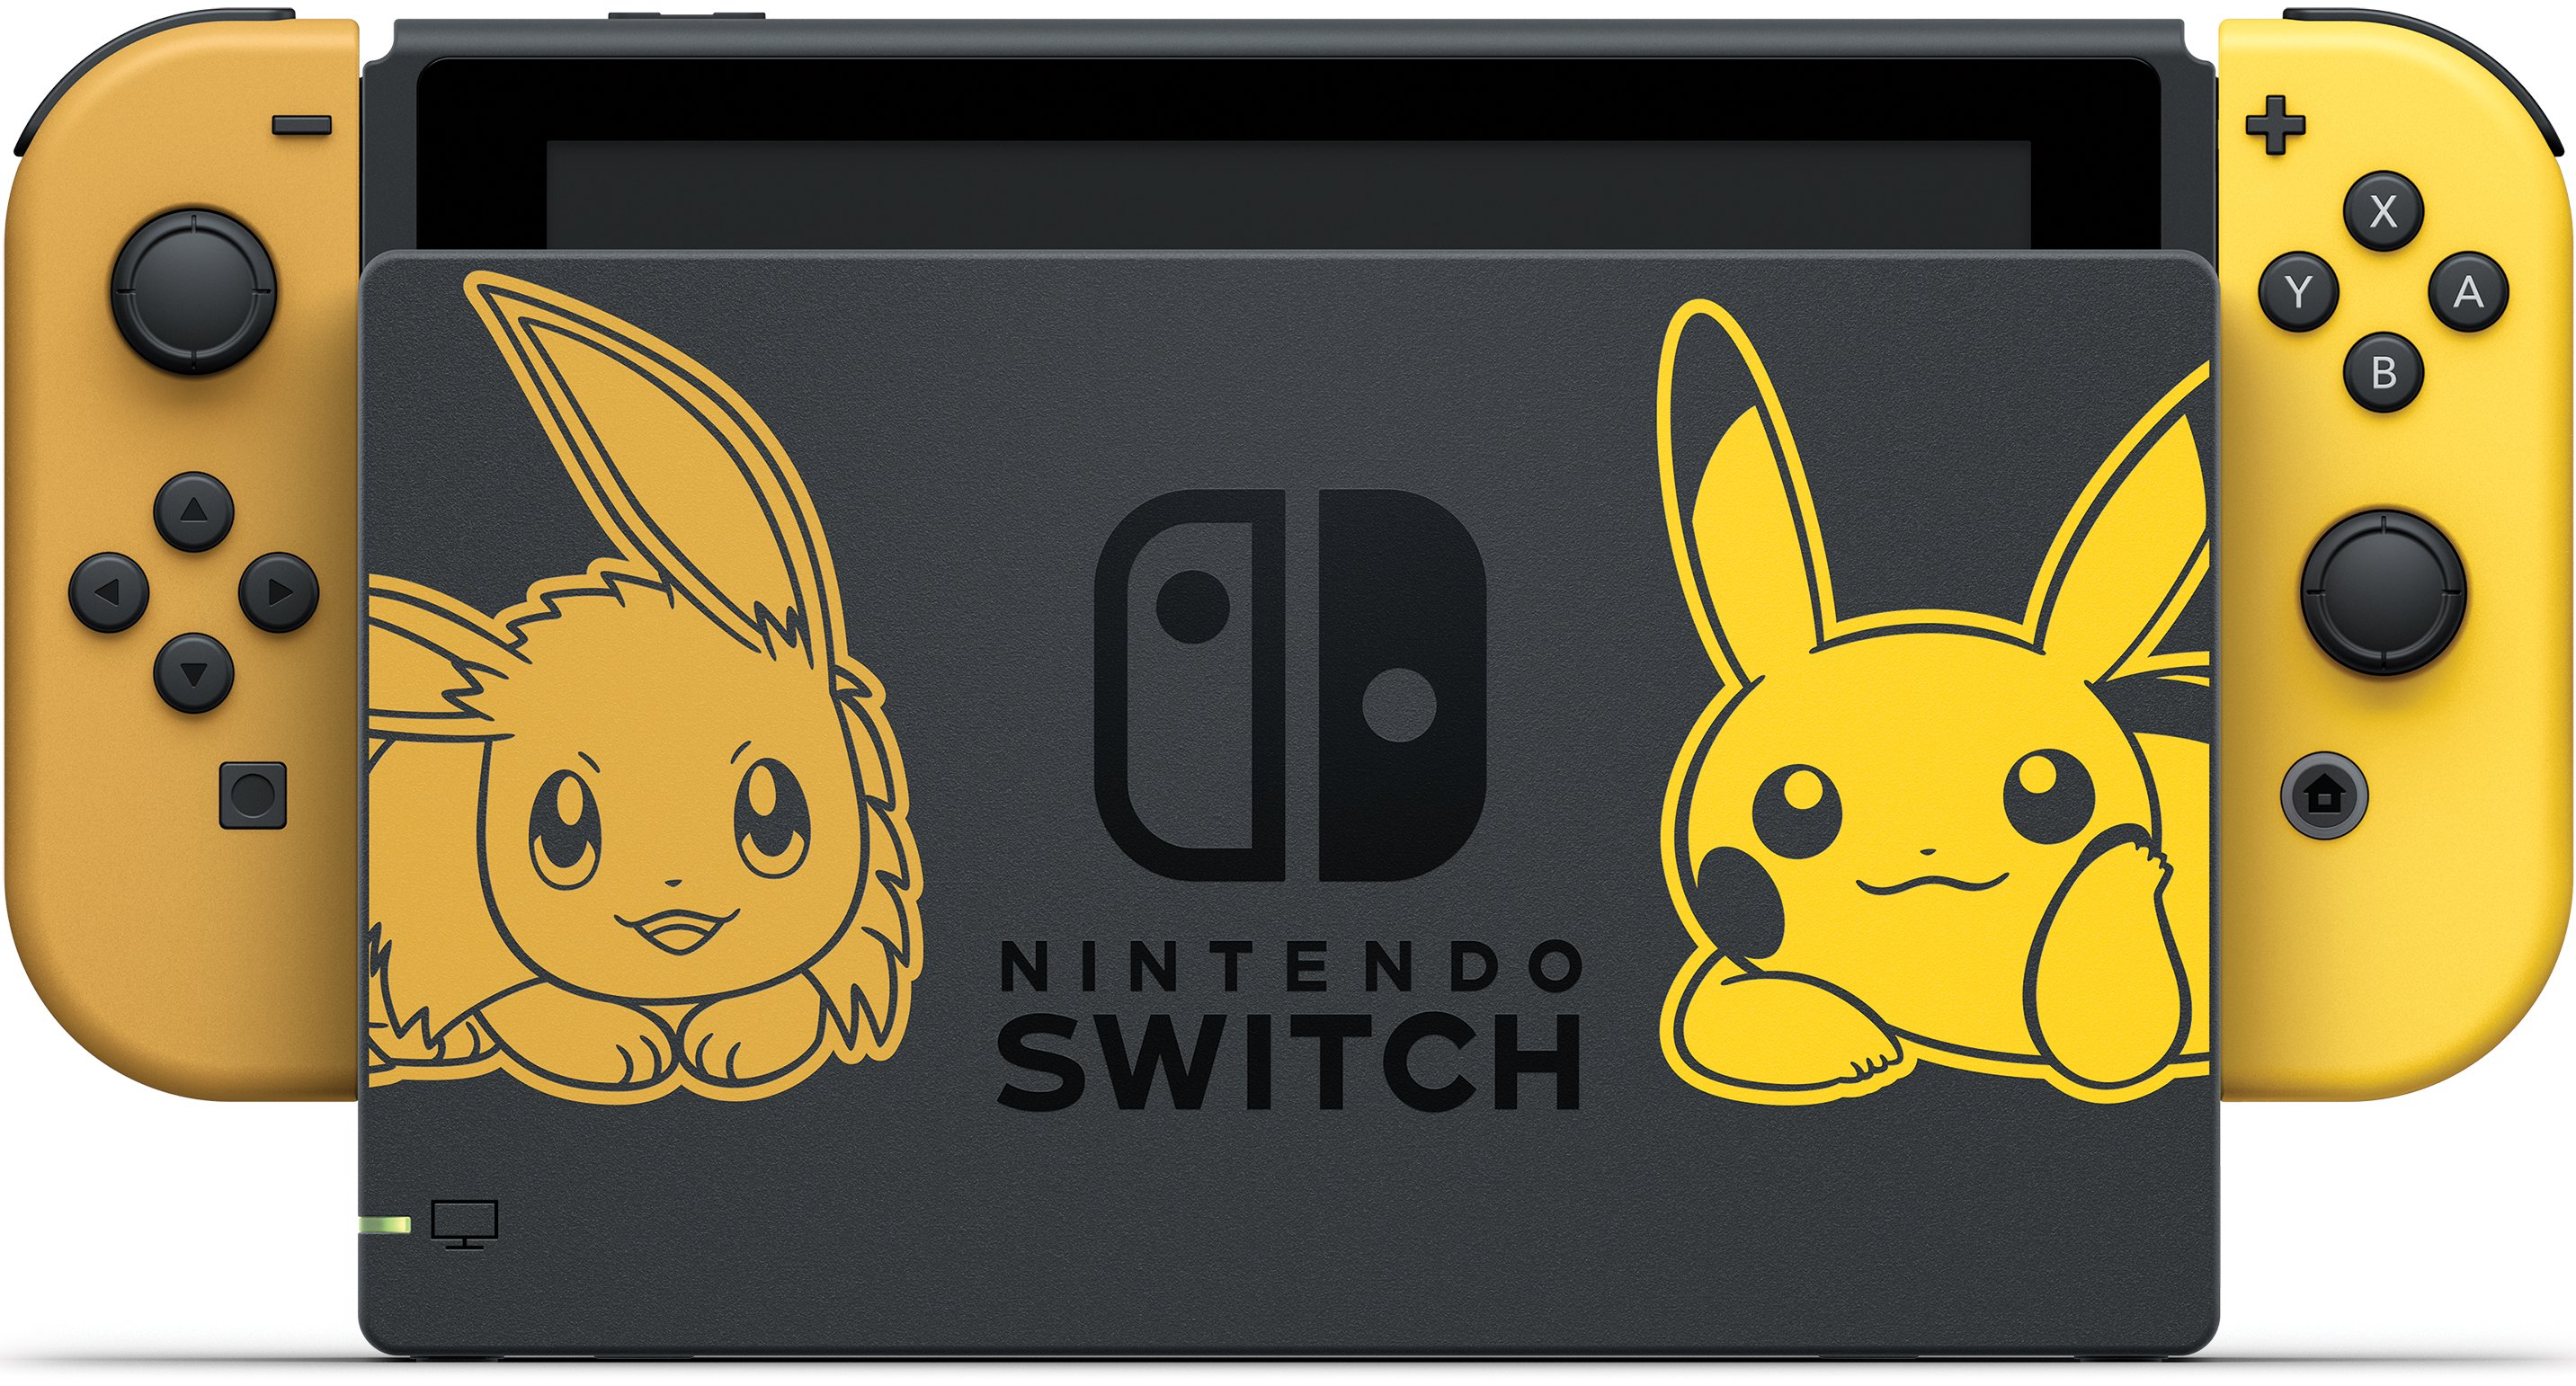 Покемоны на свитч. Нинтендо свитч покемон. Nintendo Switch приставка Пикачу. Nintendo Switch Pikachu Eevee Edition. Покемон Lets go Picachu Нинтендо свитч.